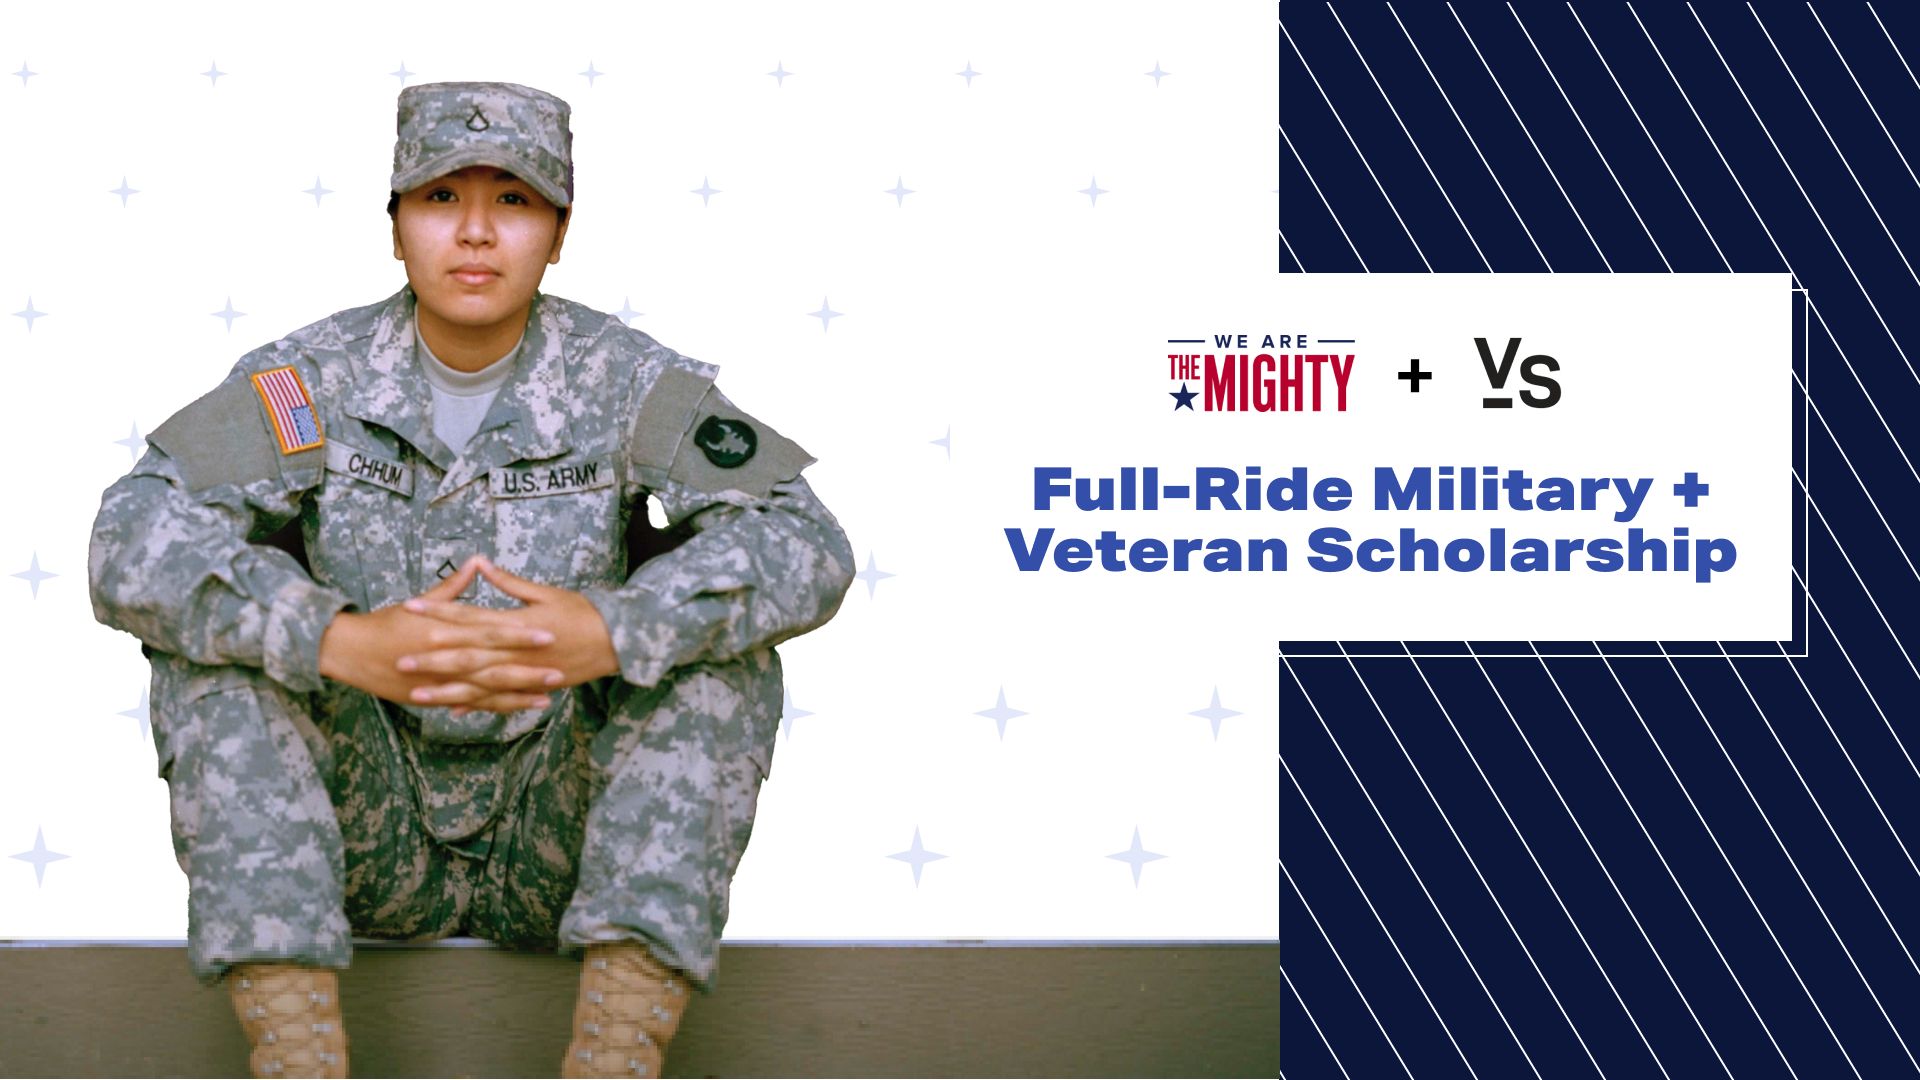 Full-Ride Military + Veteran Scholarship Now Available